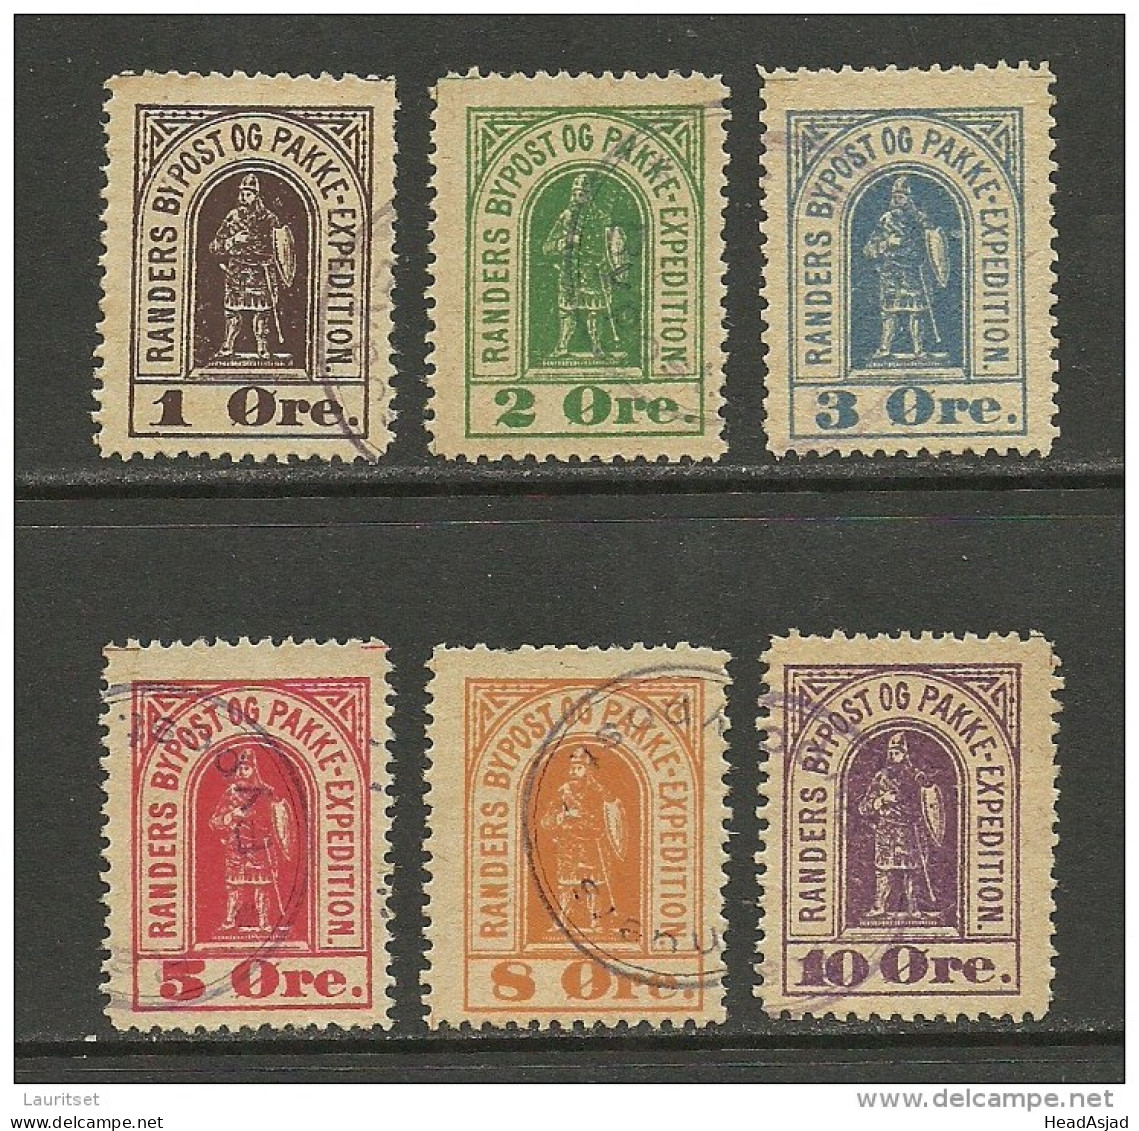 DENMARK 1887 RANDERS Lokalpost Local City Post 8 öre - Local Post Stamps